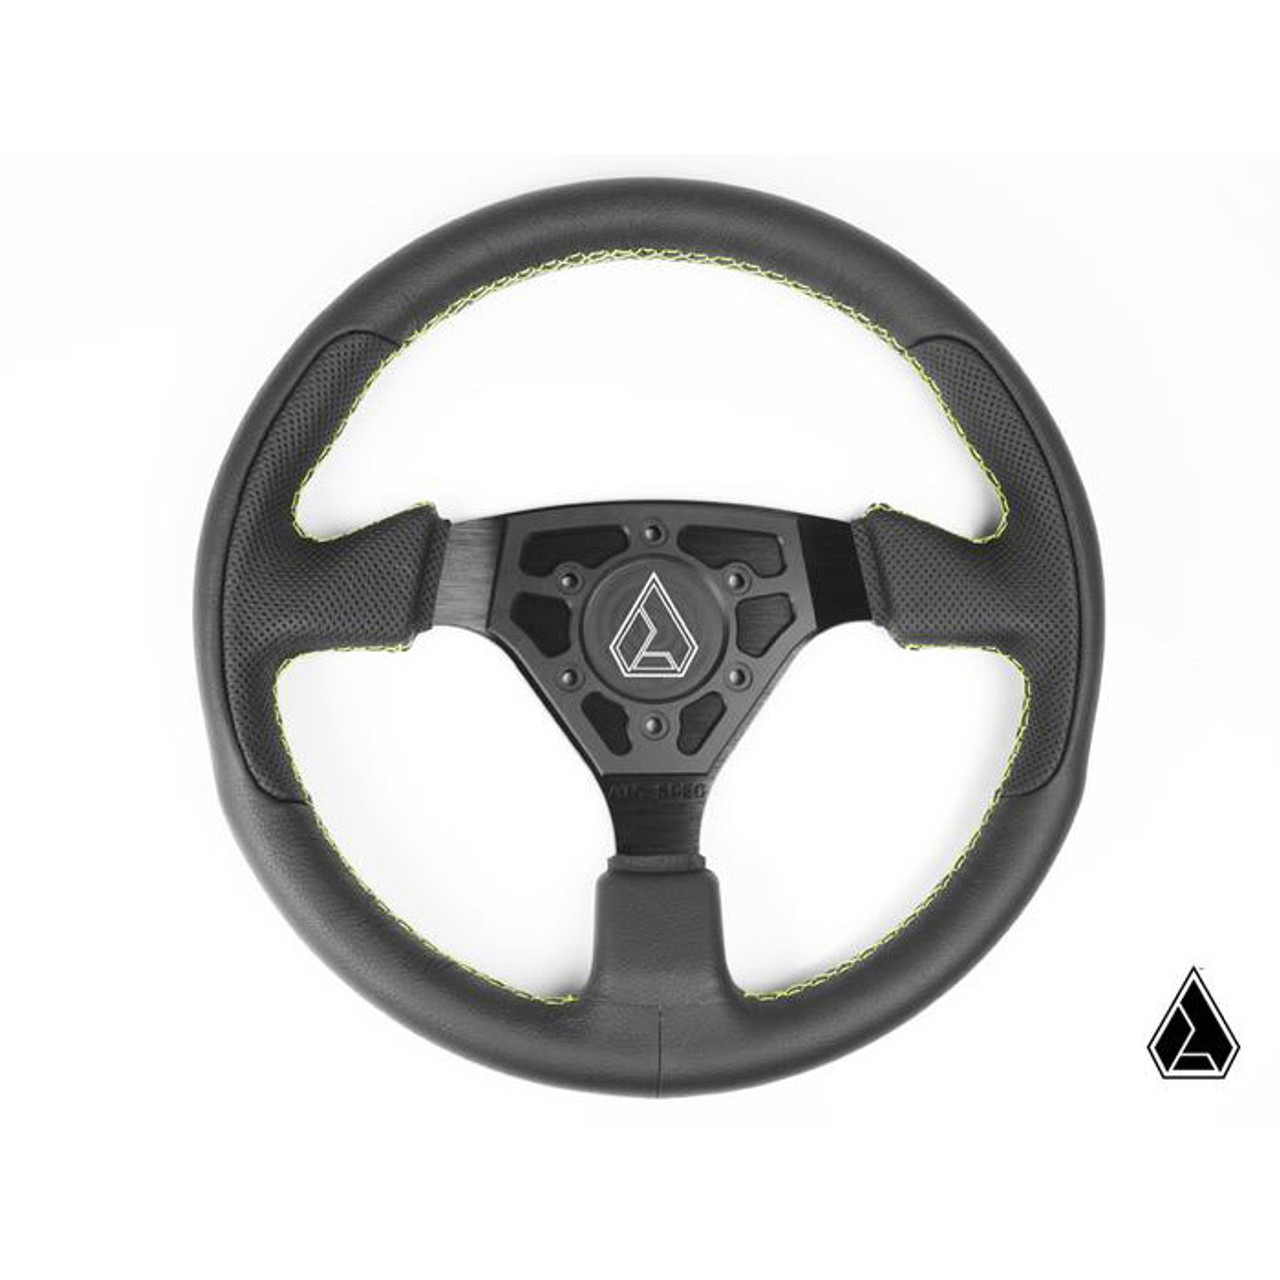 Assault Industries Tomahawk V2 Steering Wheel (Universal) additional image 5